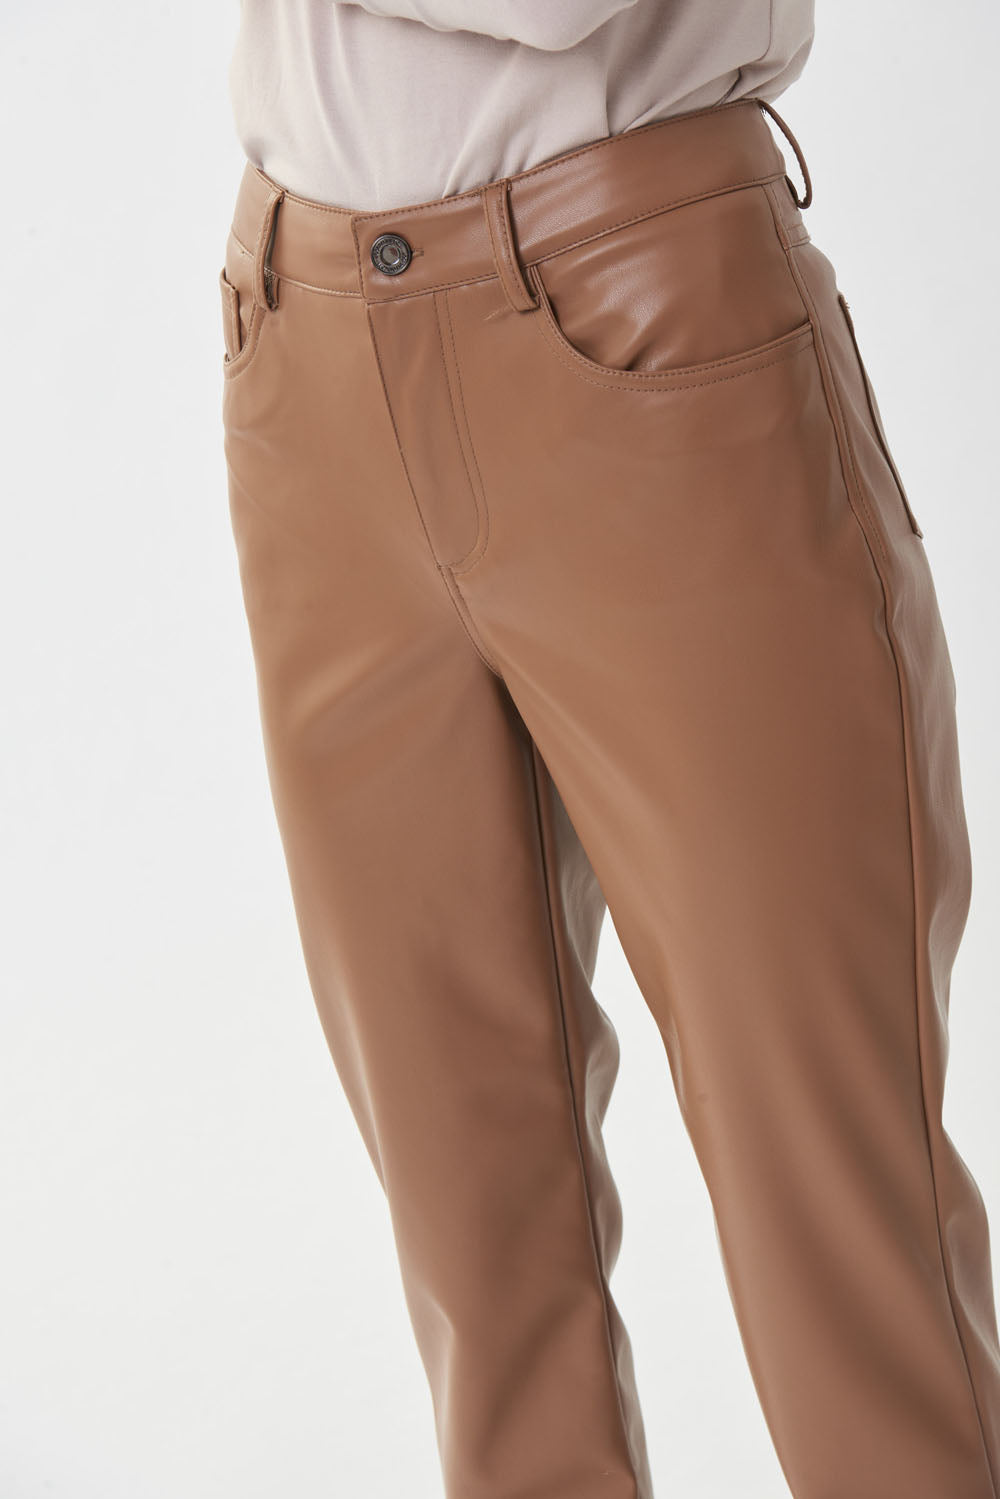 Joseph Ribkoff Faux Leather Pants Style 223196